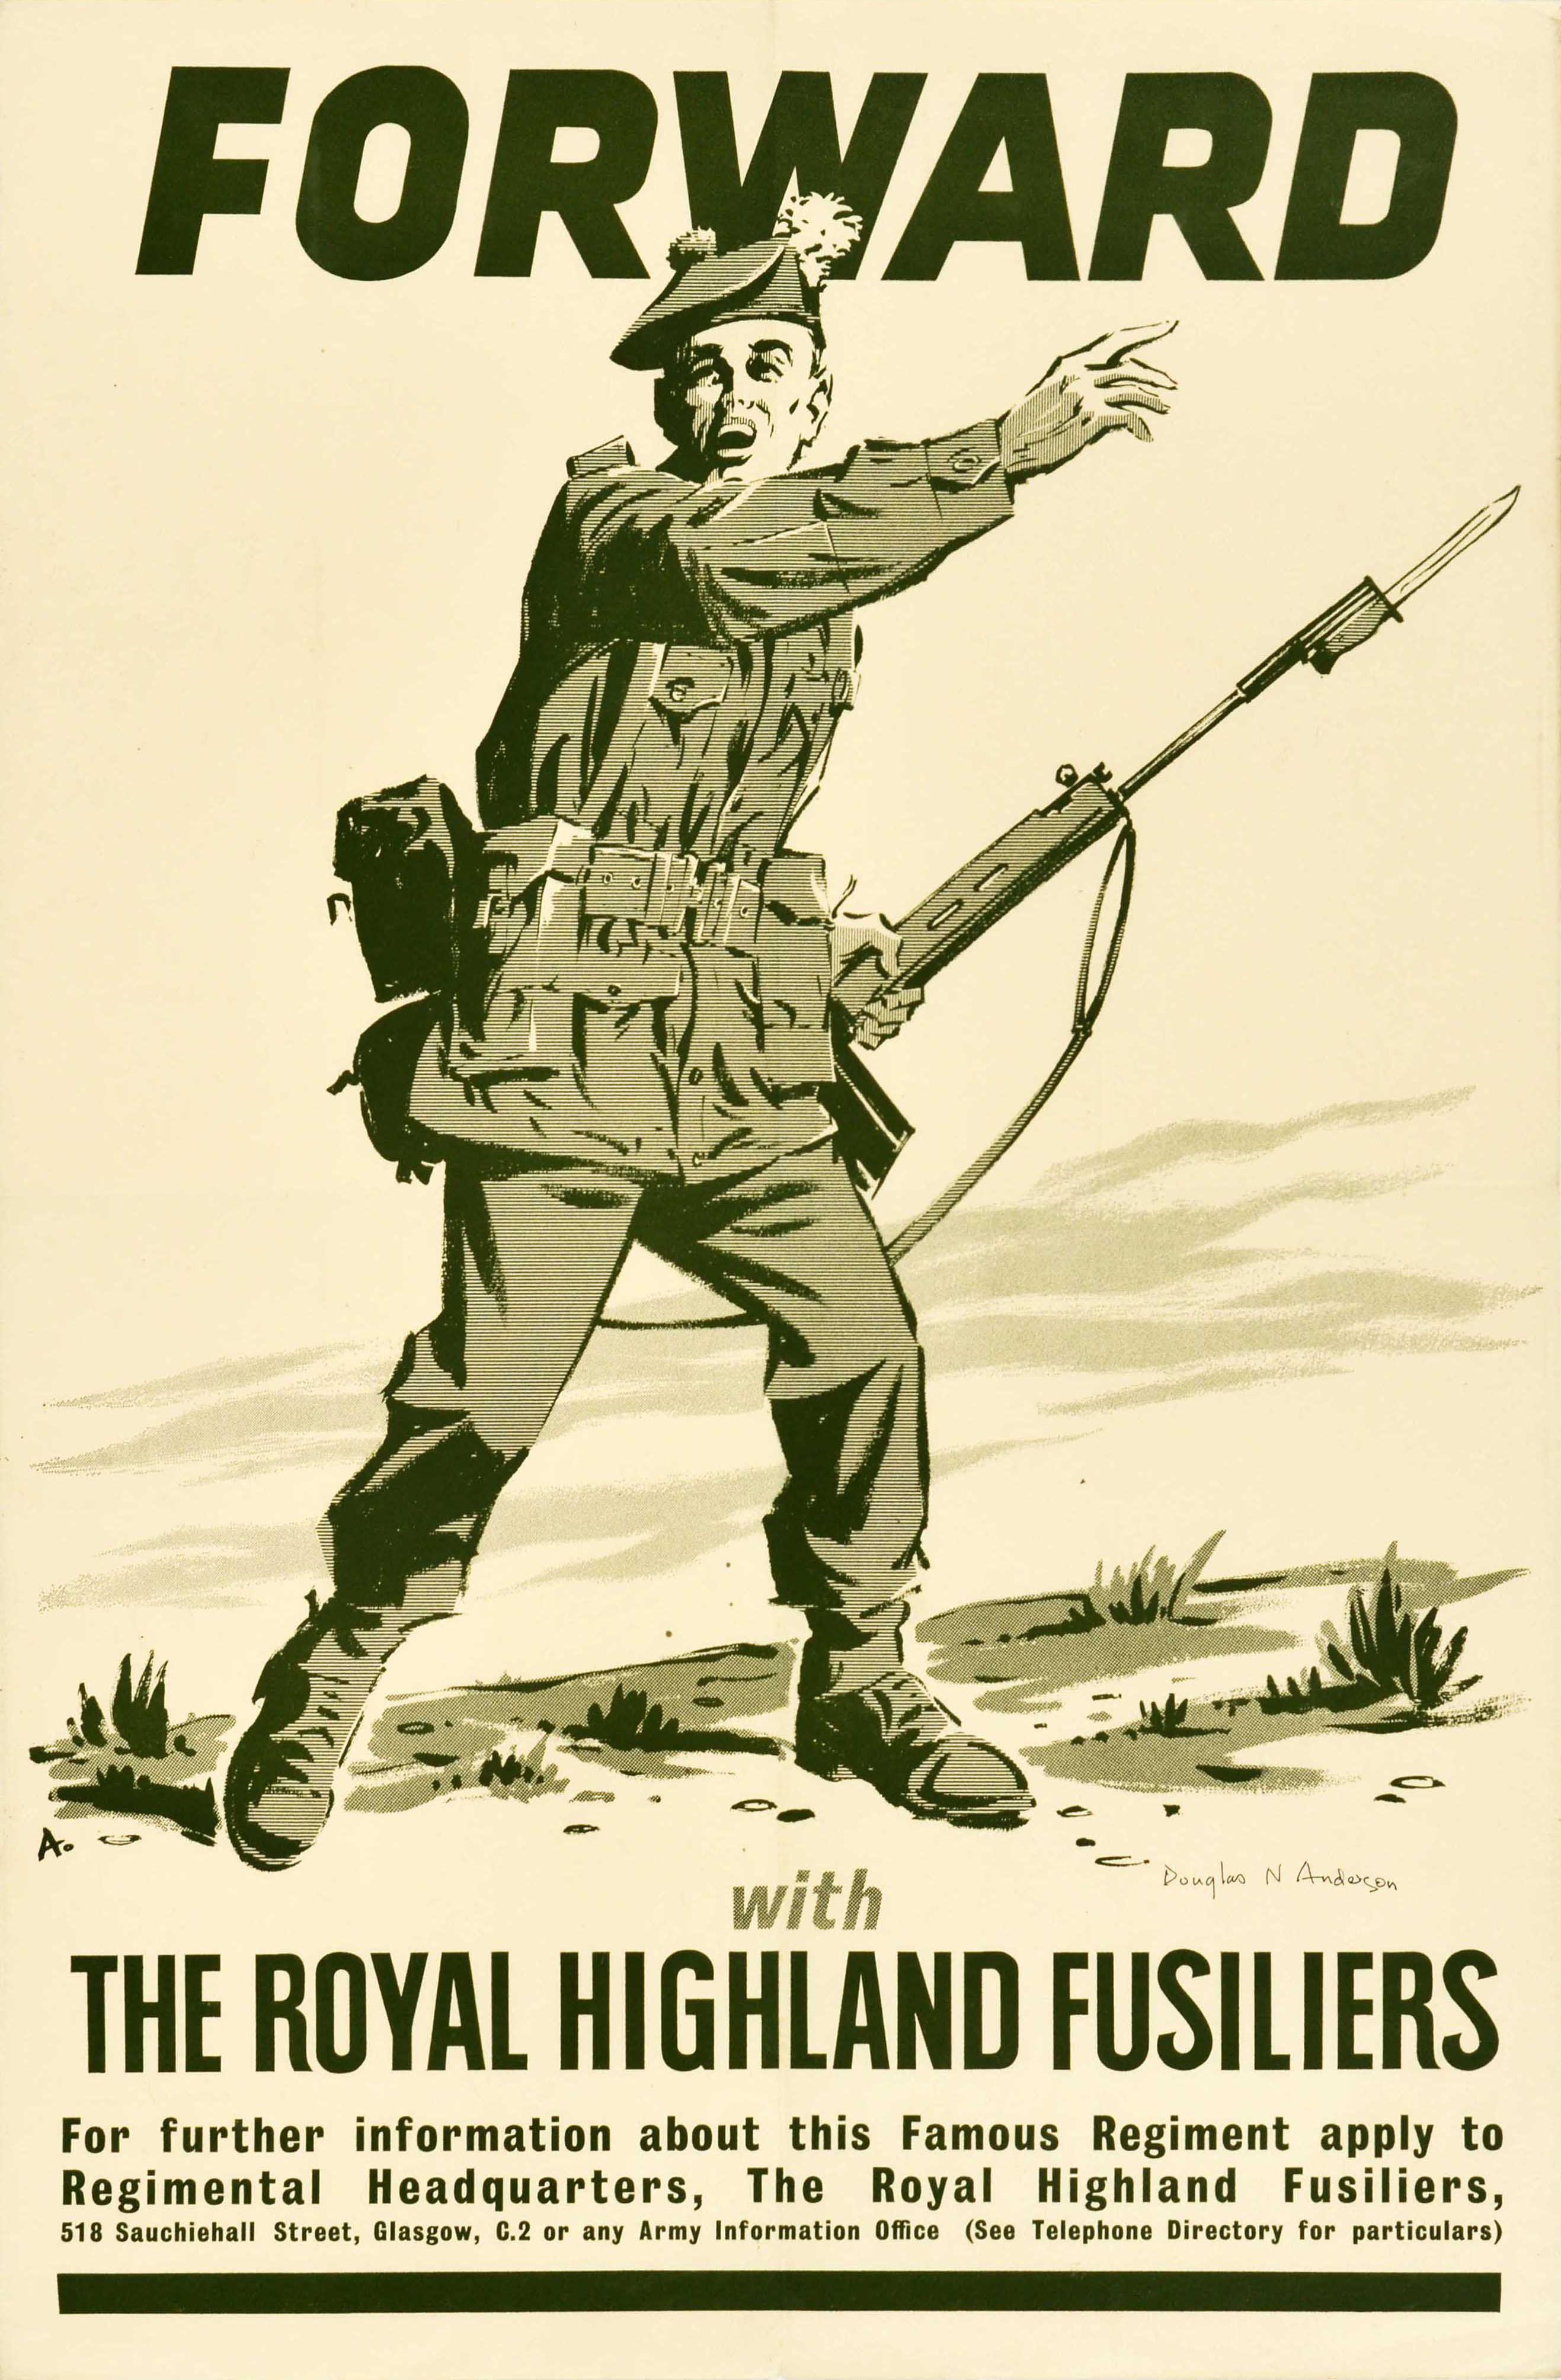 Douglas N Anderson Print - Original Vintage Military Poster Forward The Royal Highland Fusiliers Regiment